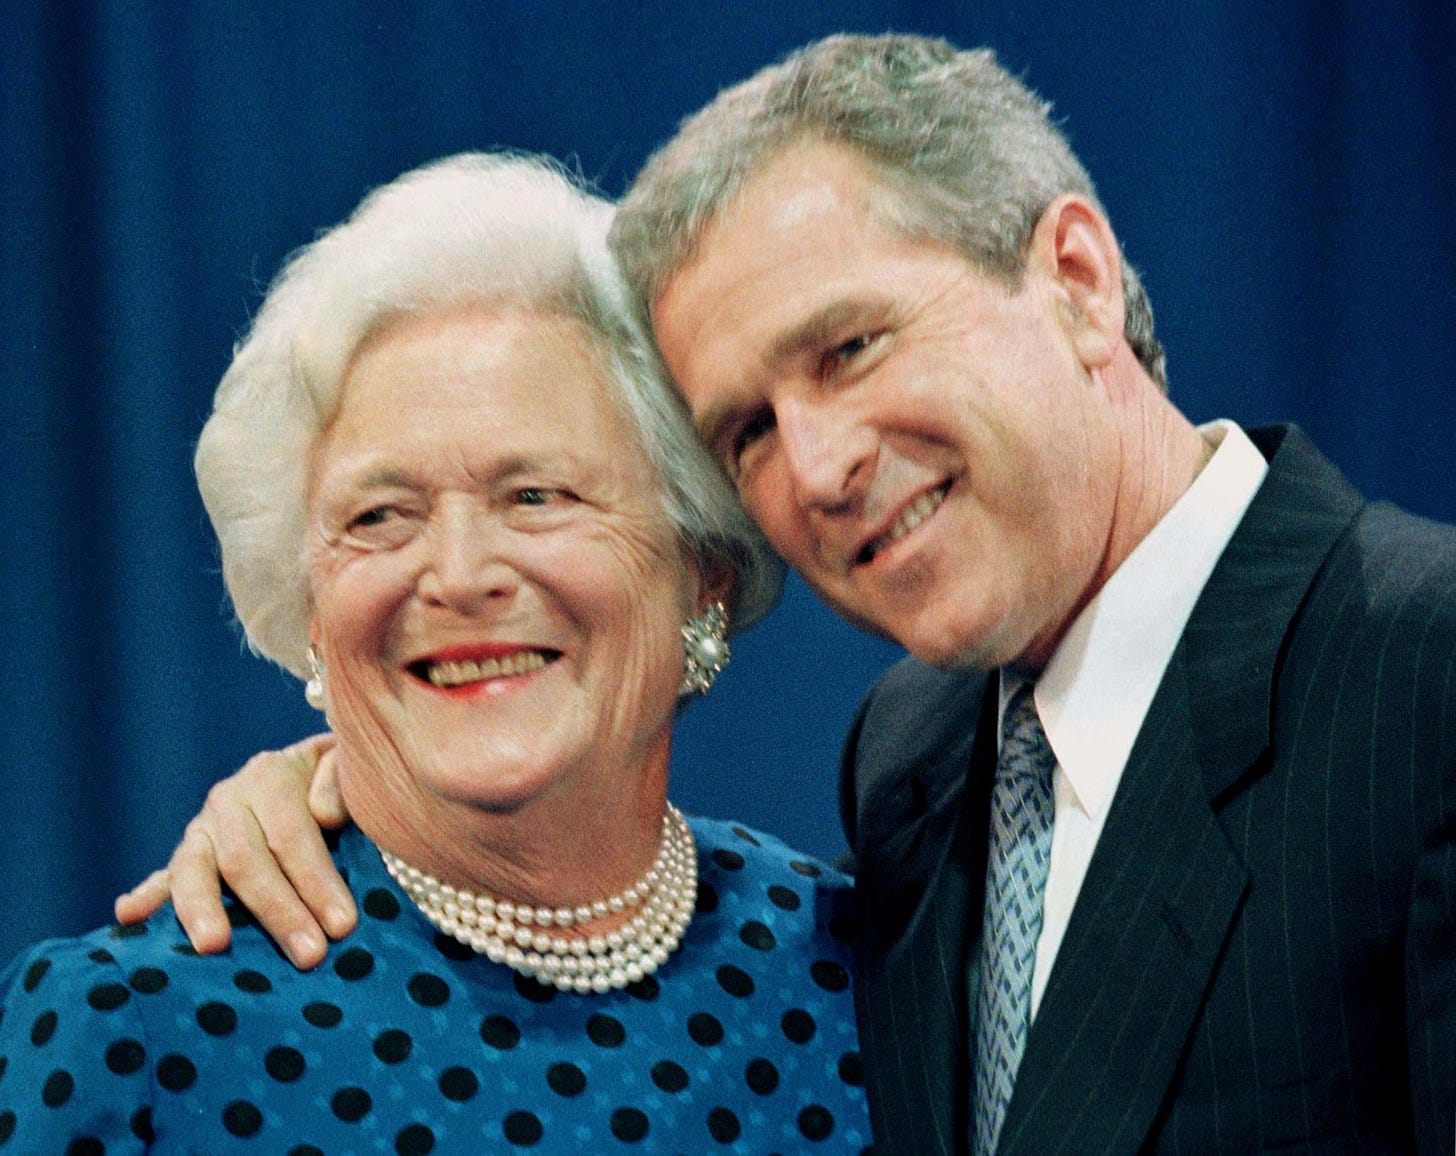 President George W. Bush on loss of Barbara Bush: "It's the end of a  beautiful life" - CBS News